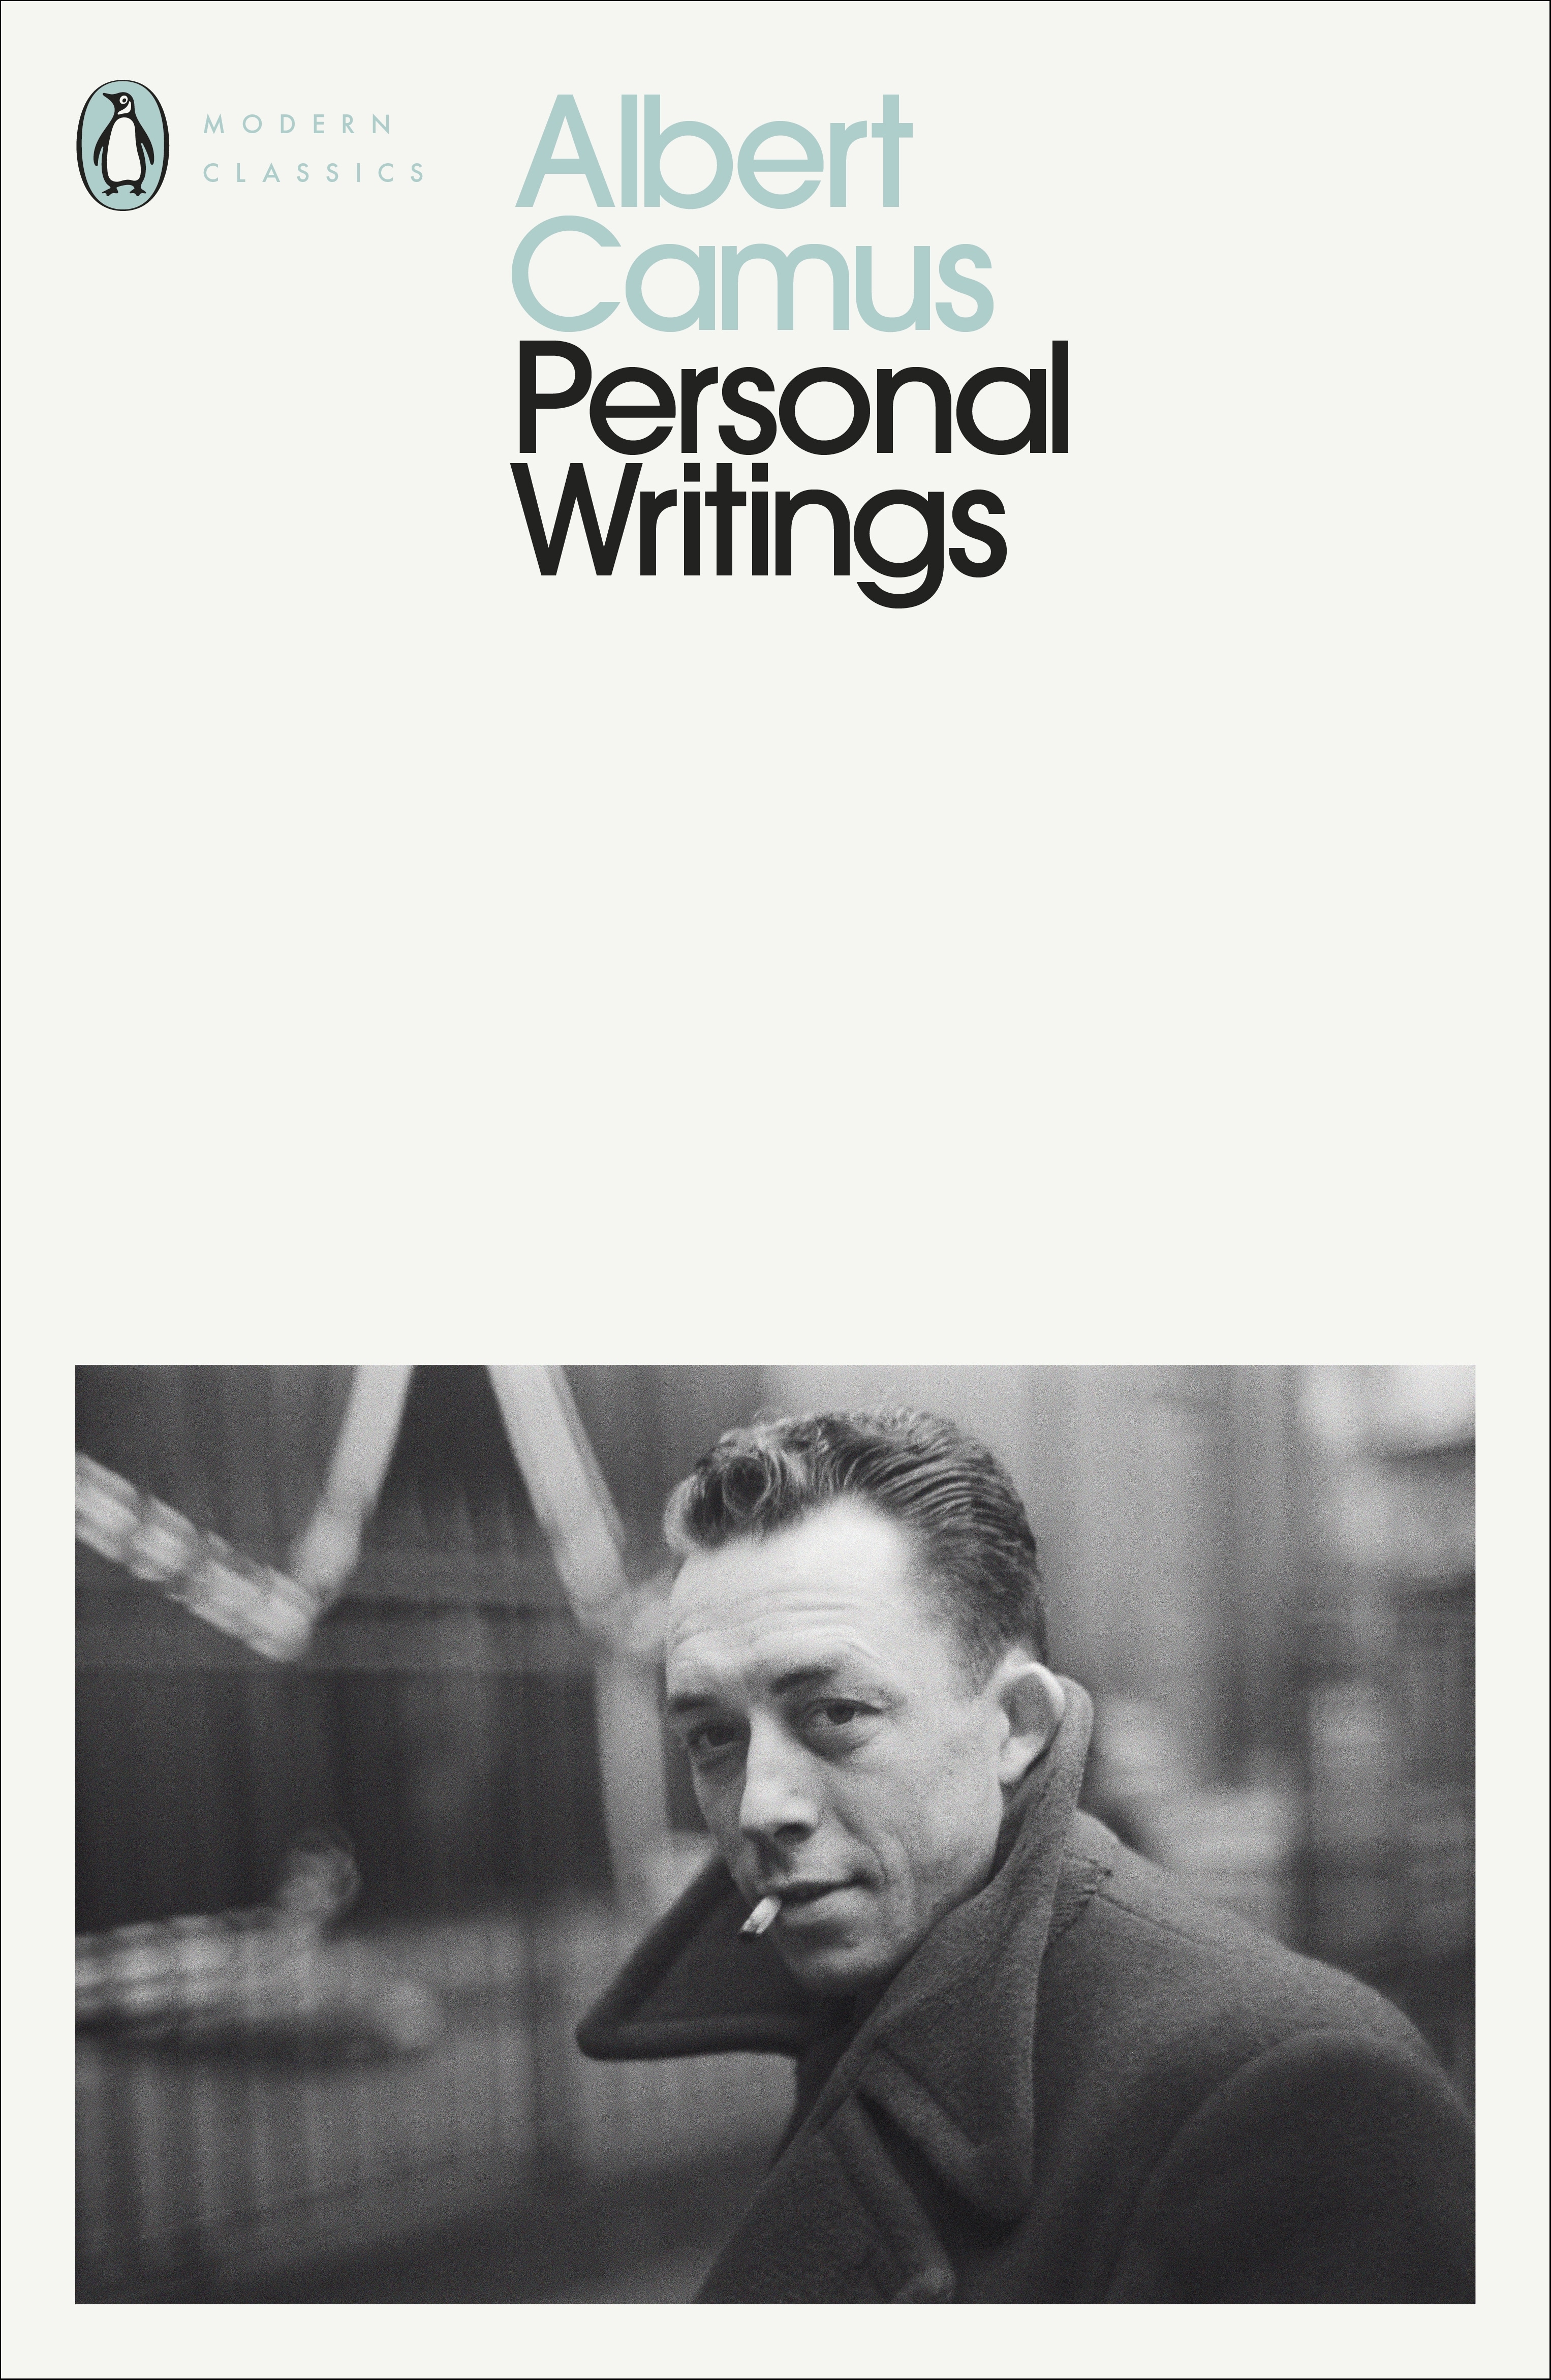 Book “Personal Writings” by Albert Camus — August 27, 2020